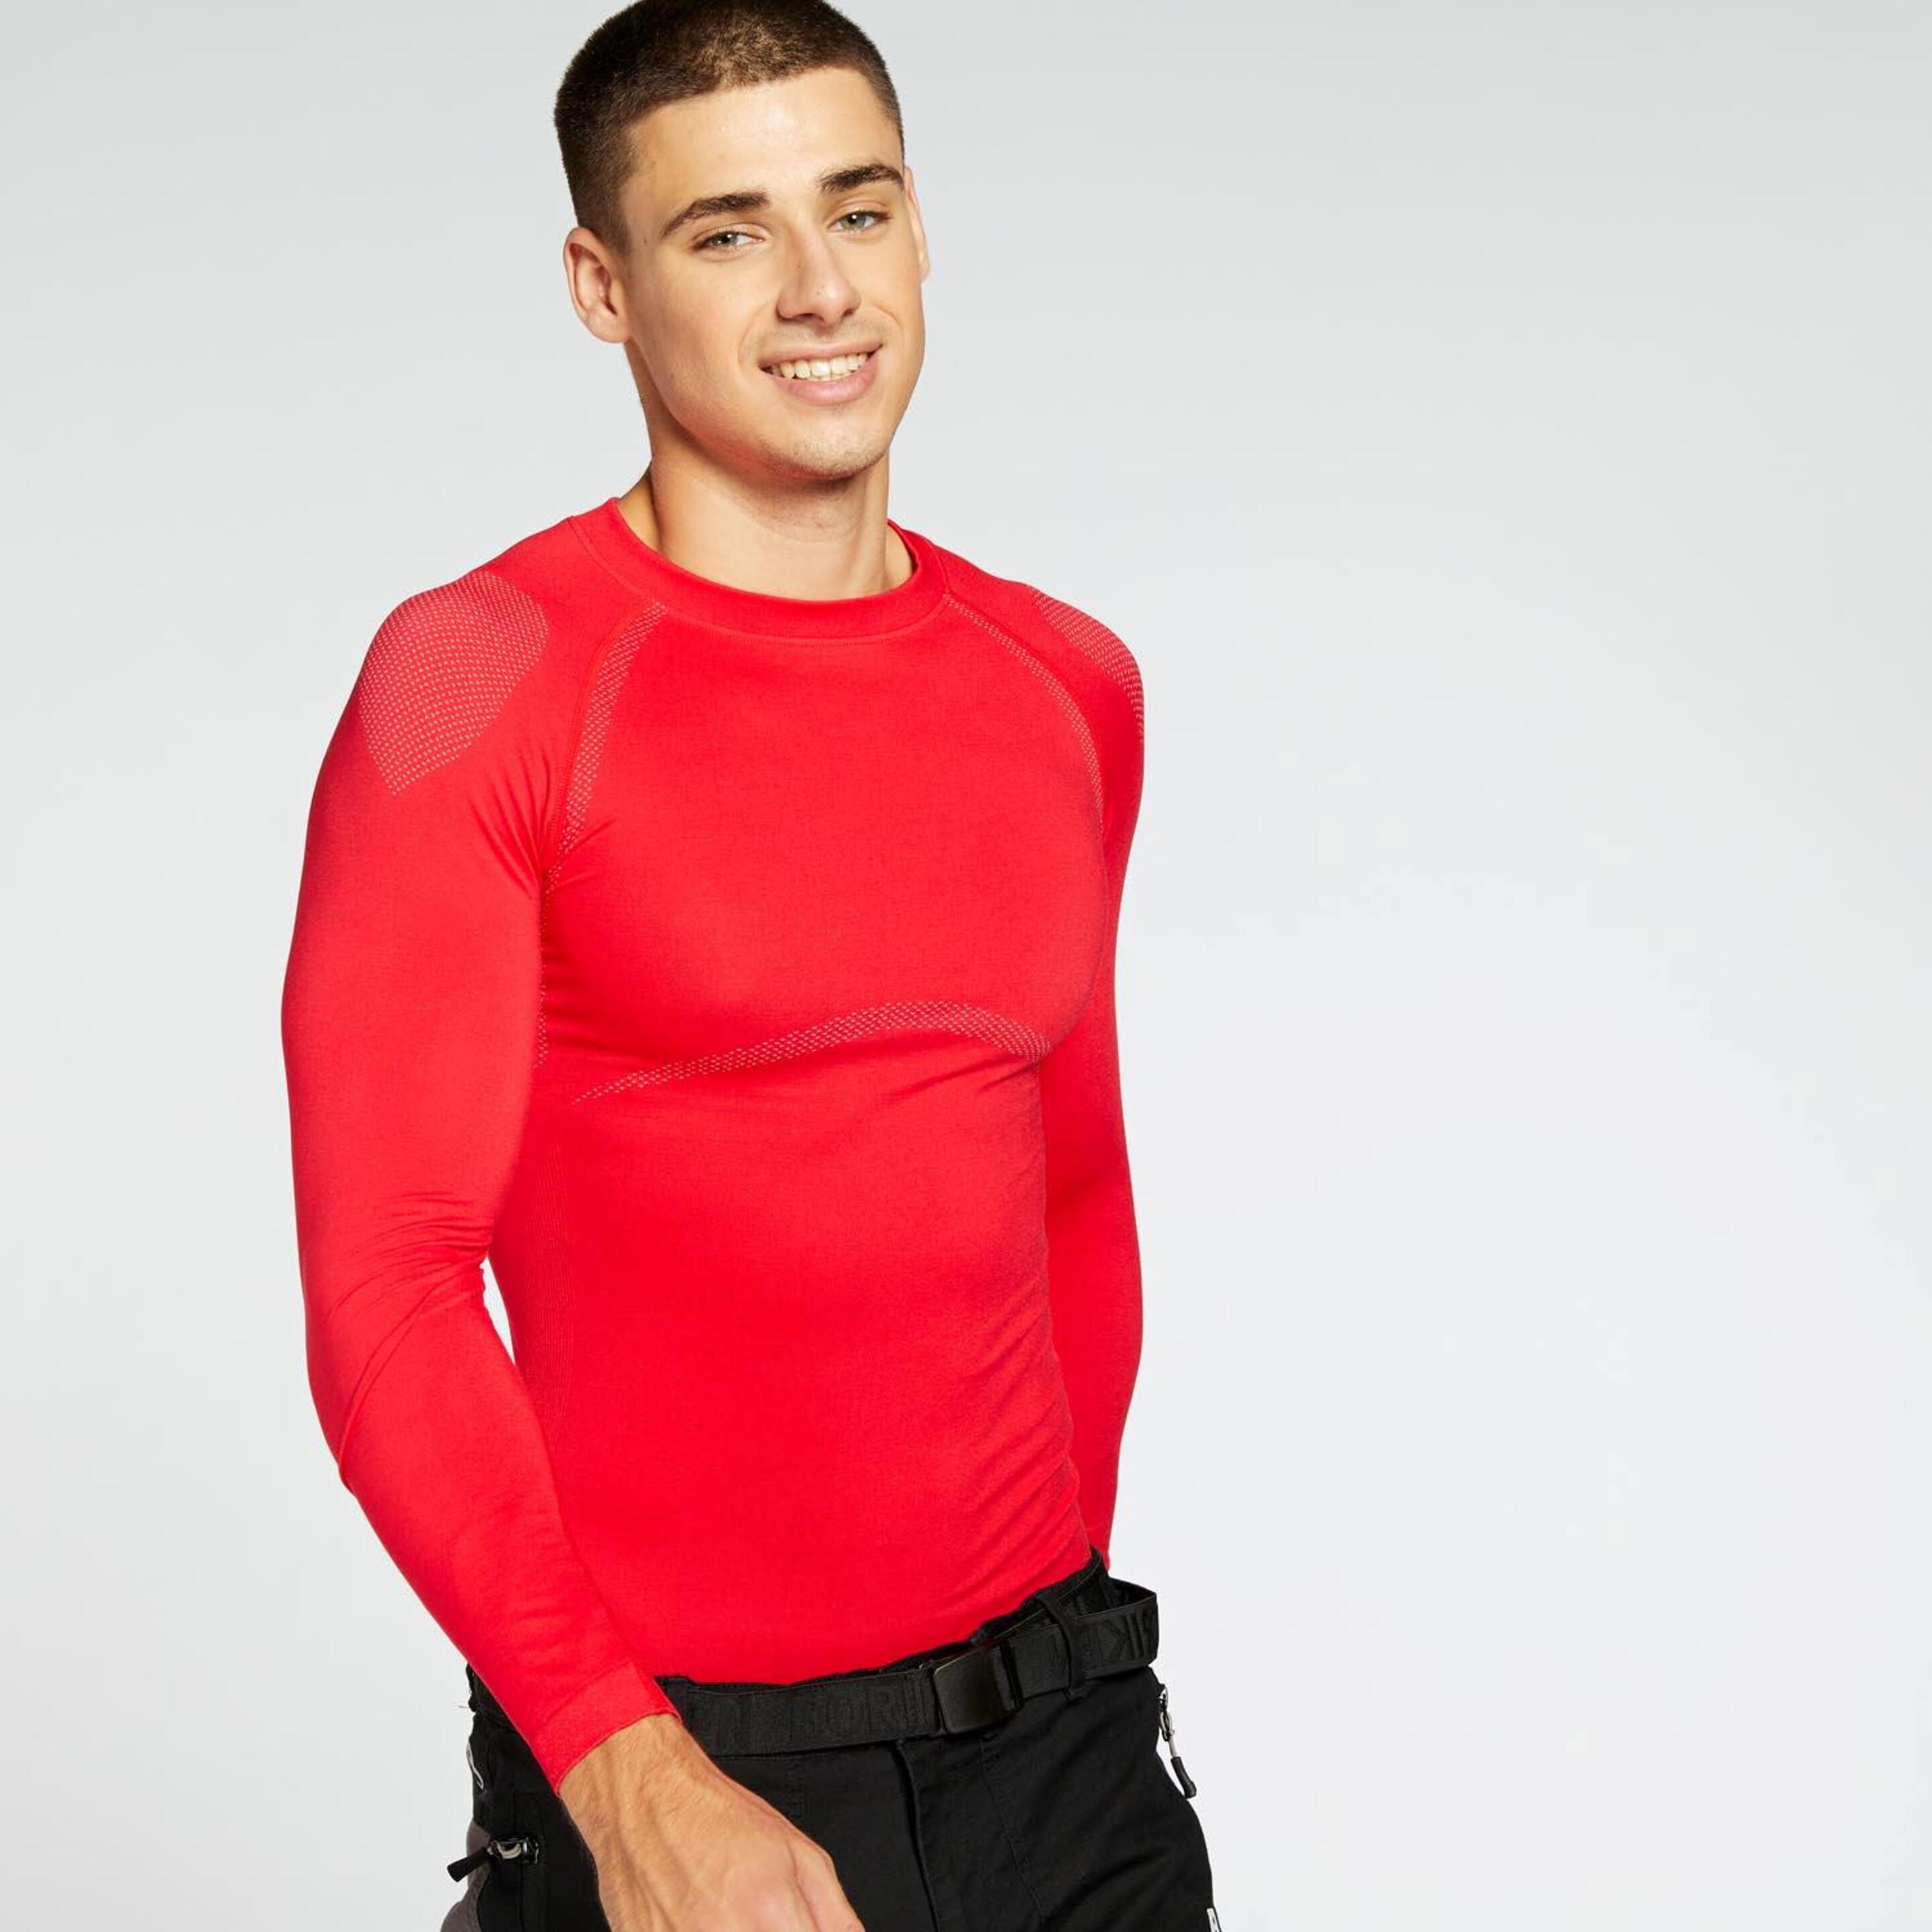 Camiseta Interior Boriken - Rojo - Camiseta Térmica Hombre